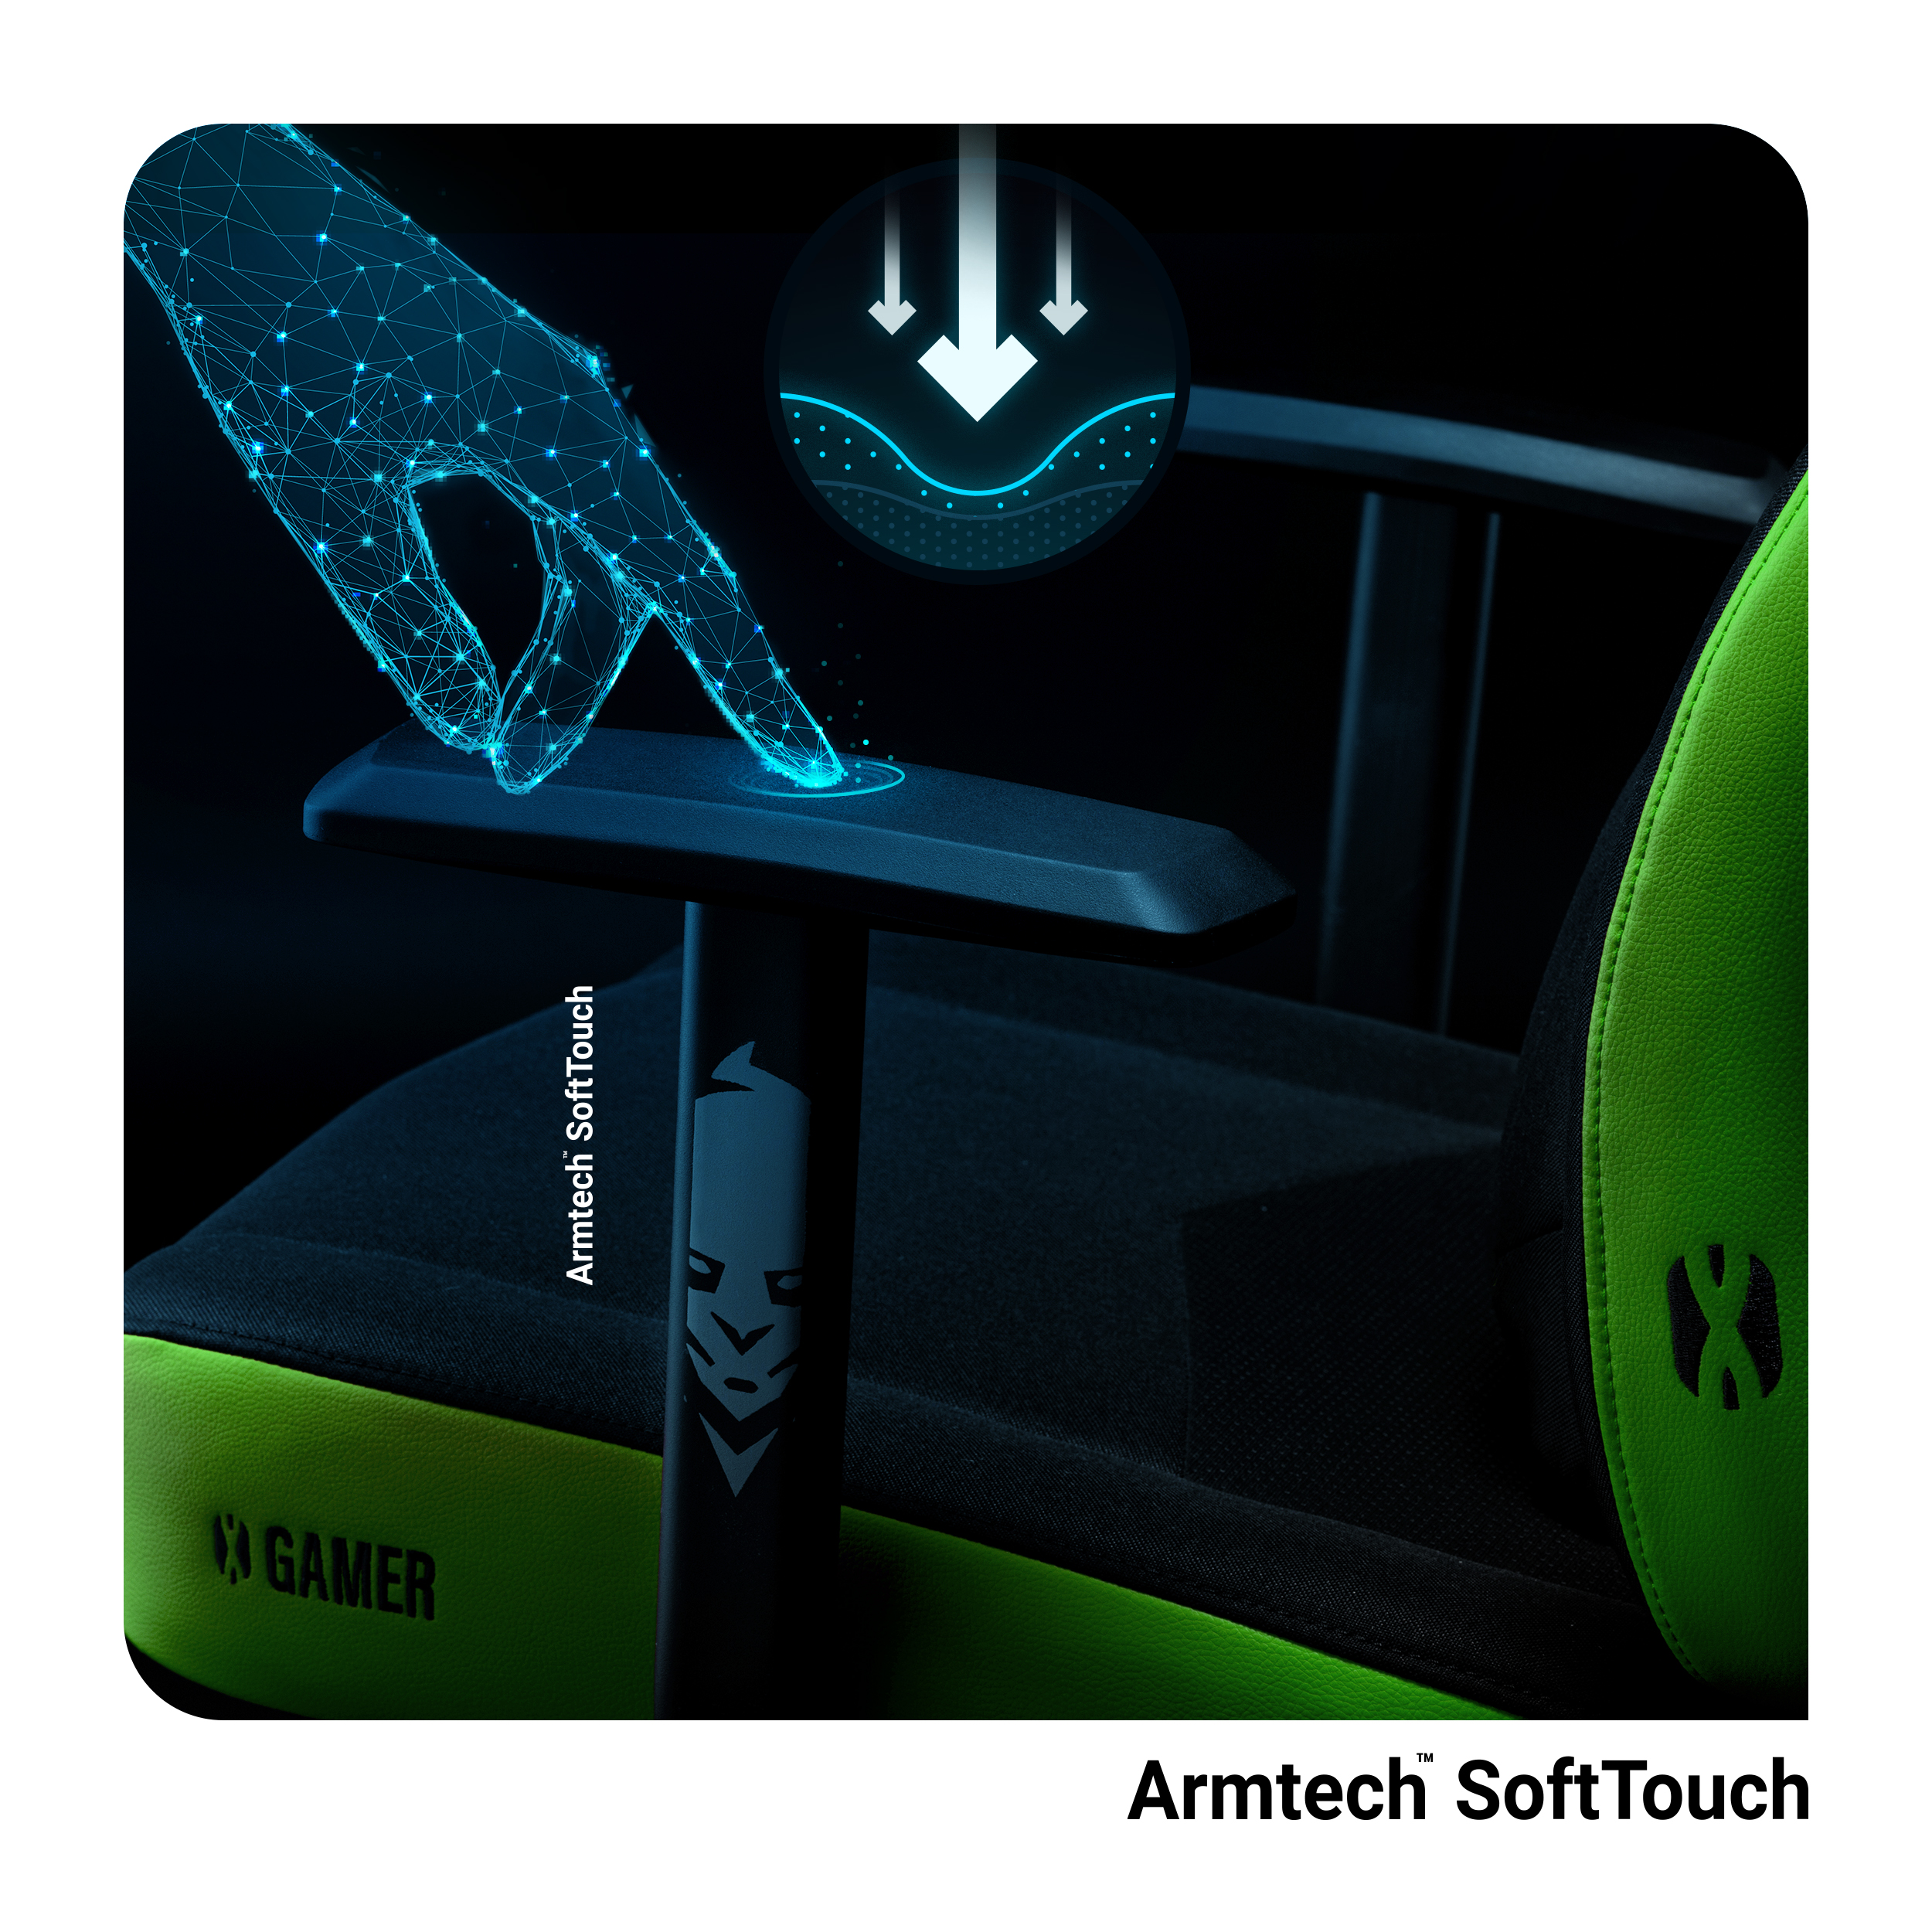 DIABLO CHAIRS GAMING STUHL 2.0 X-GAMER black/green Gaming NORMAL Chair